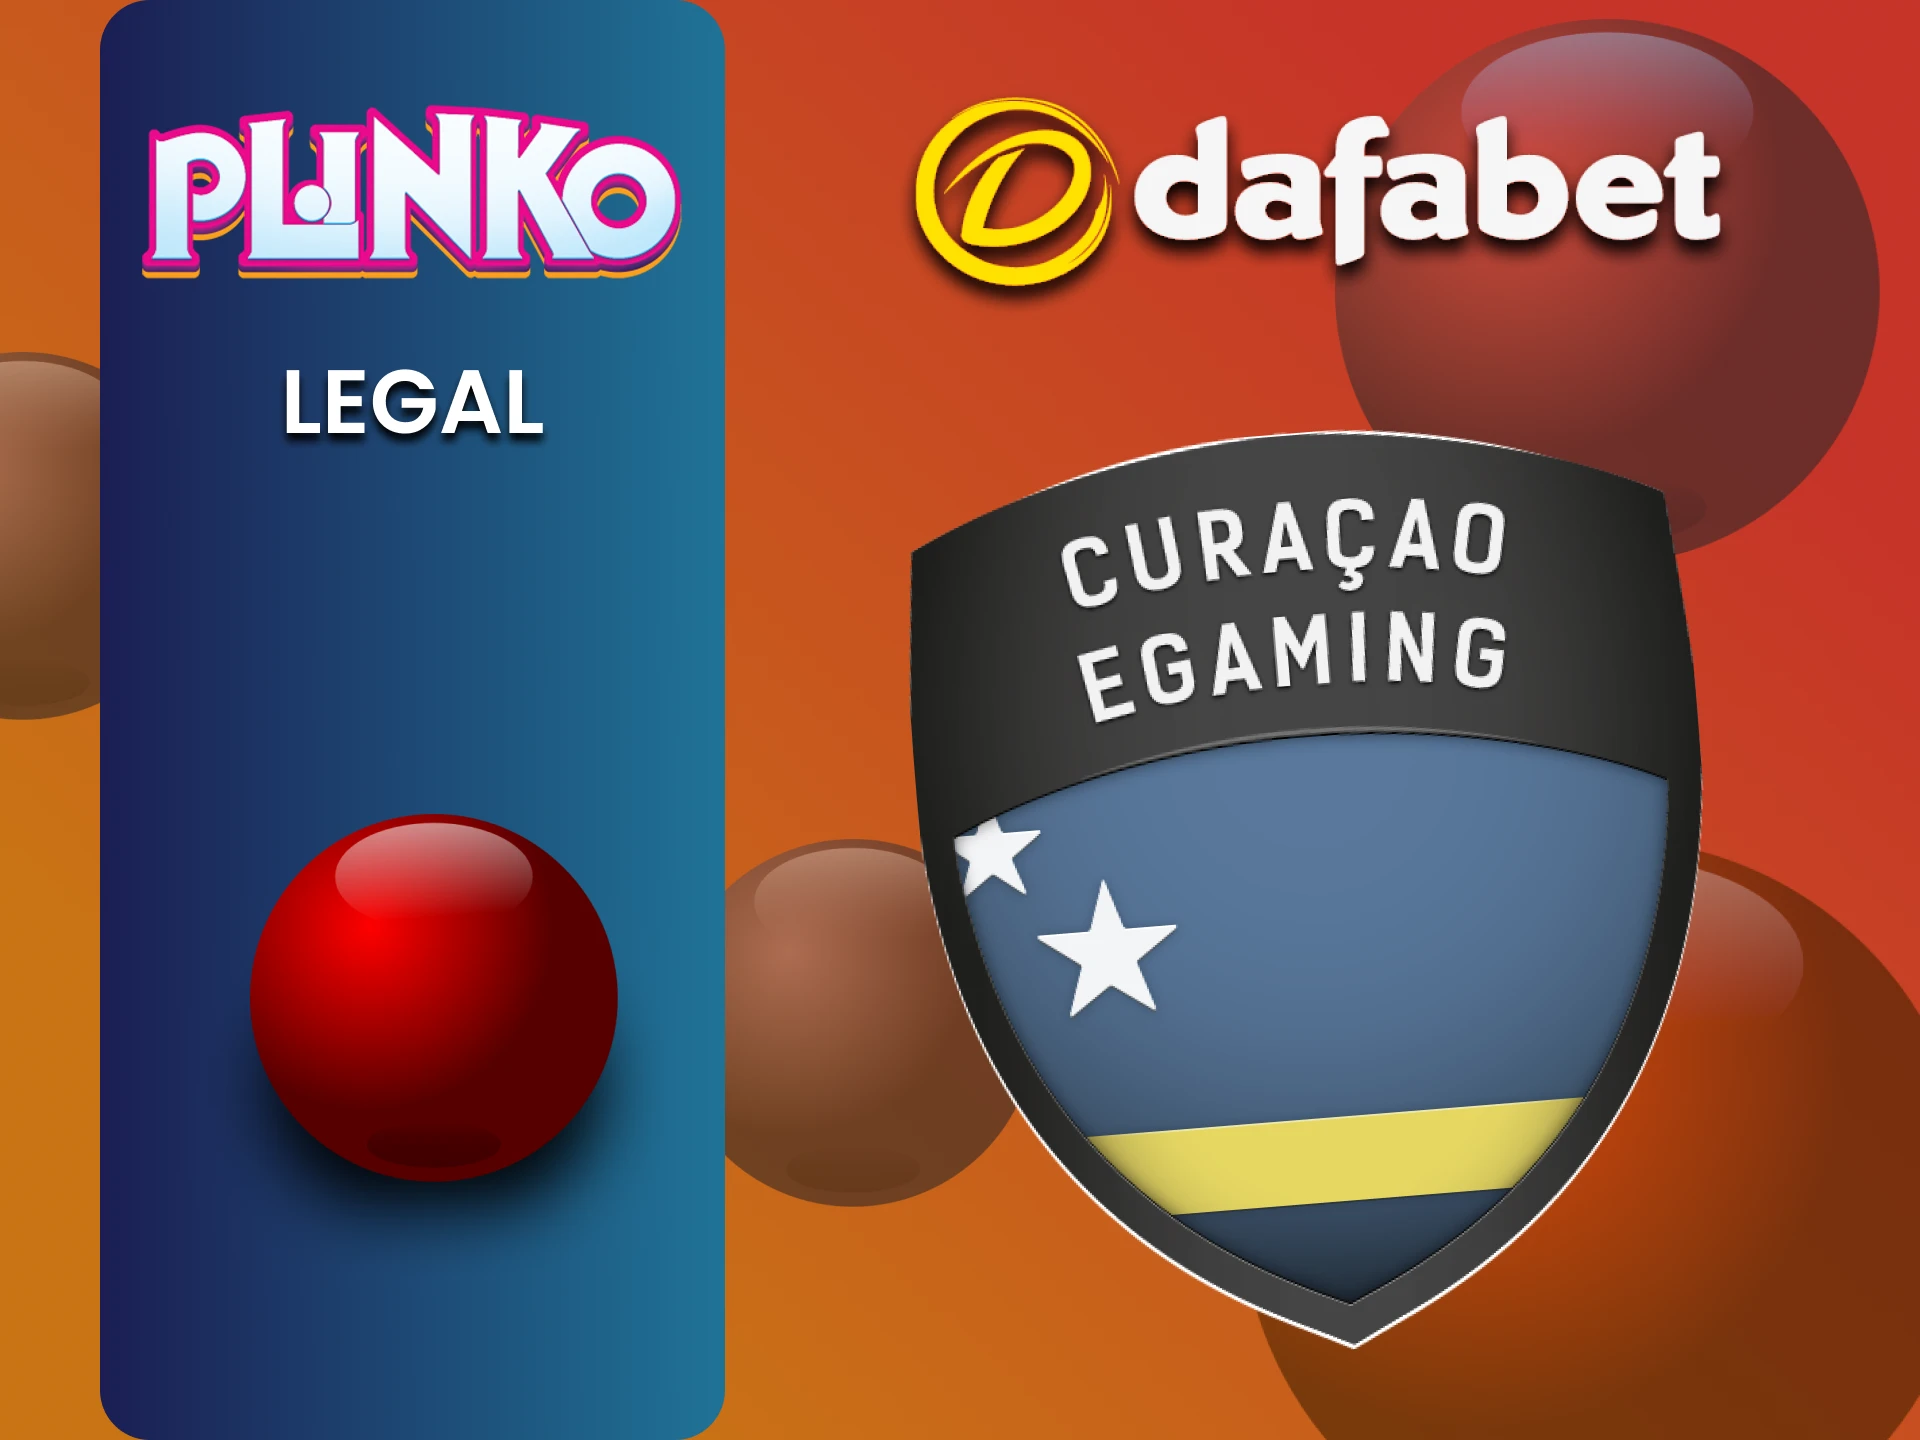 Dafabet has a license to play Plinko.